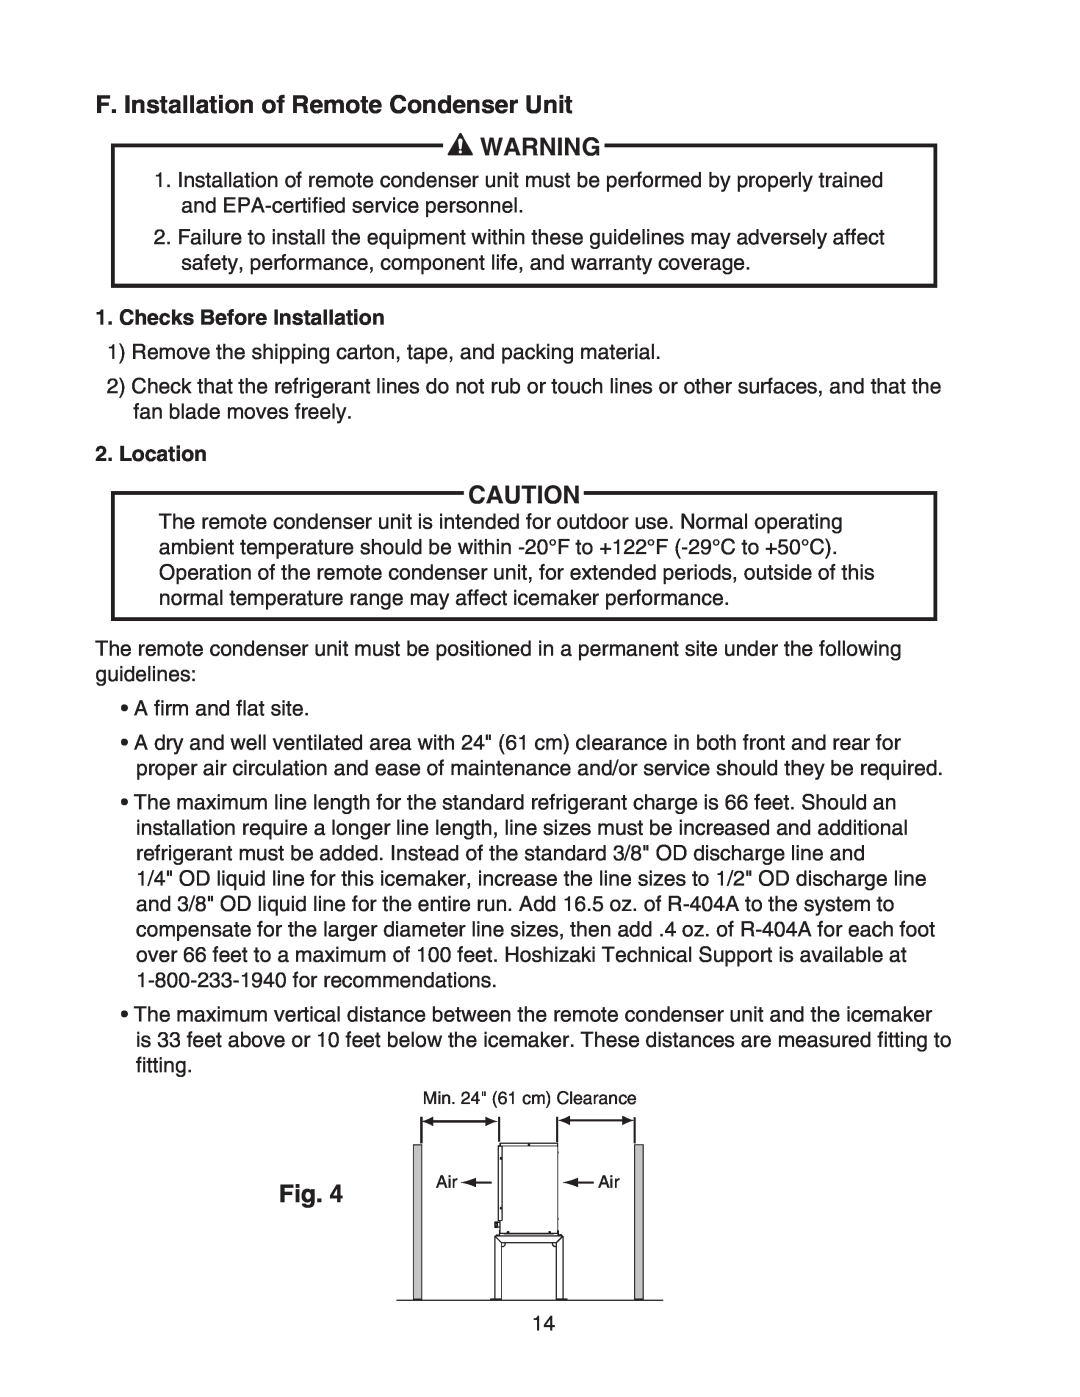 Hoshizaki KM-650MAH instruction manual F. Installation of Remote Condenser Unit, Checks Before Installation, Location 